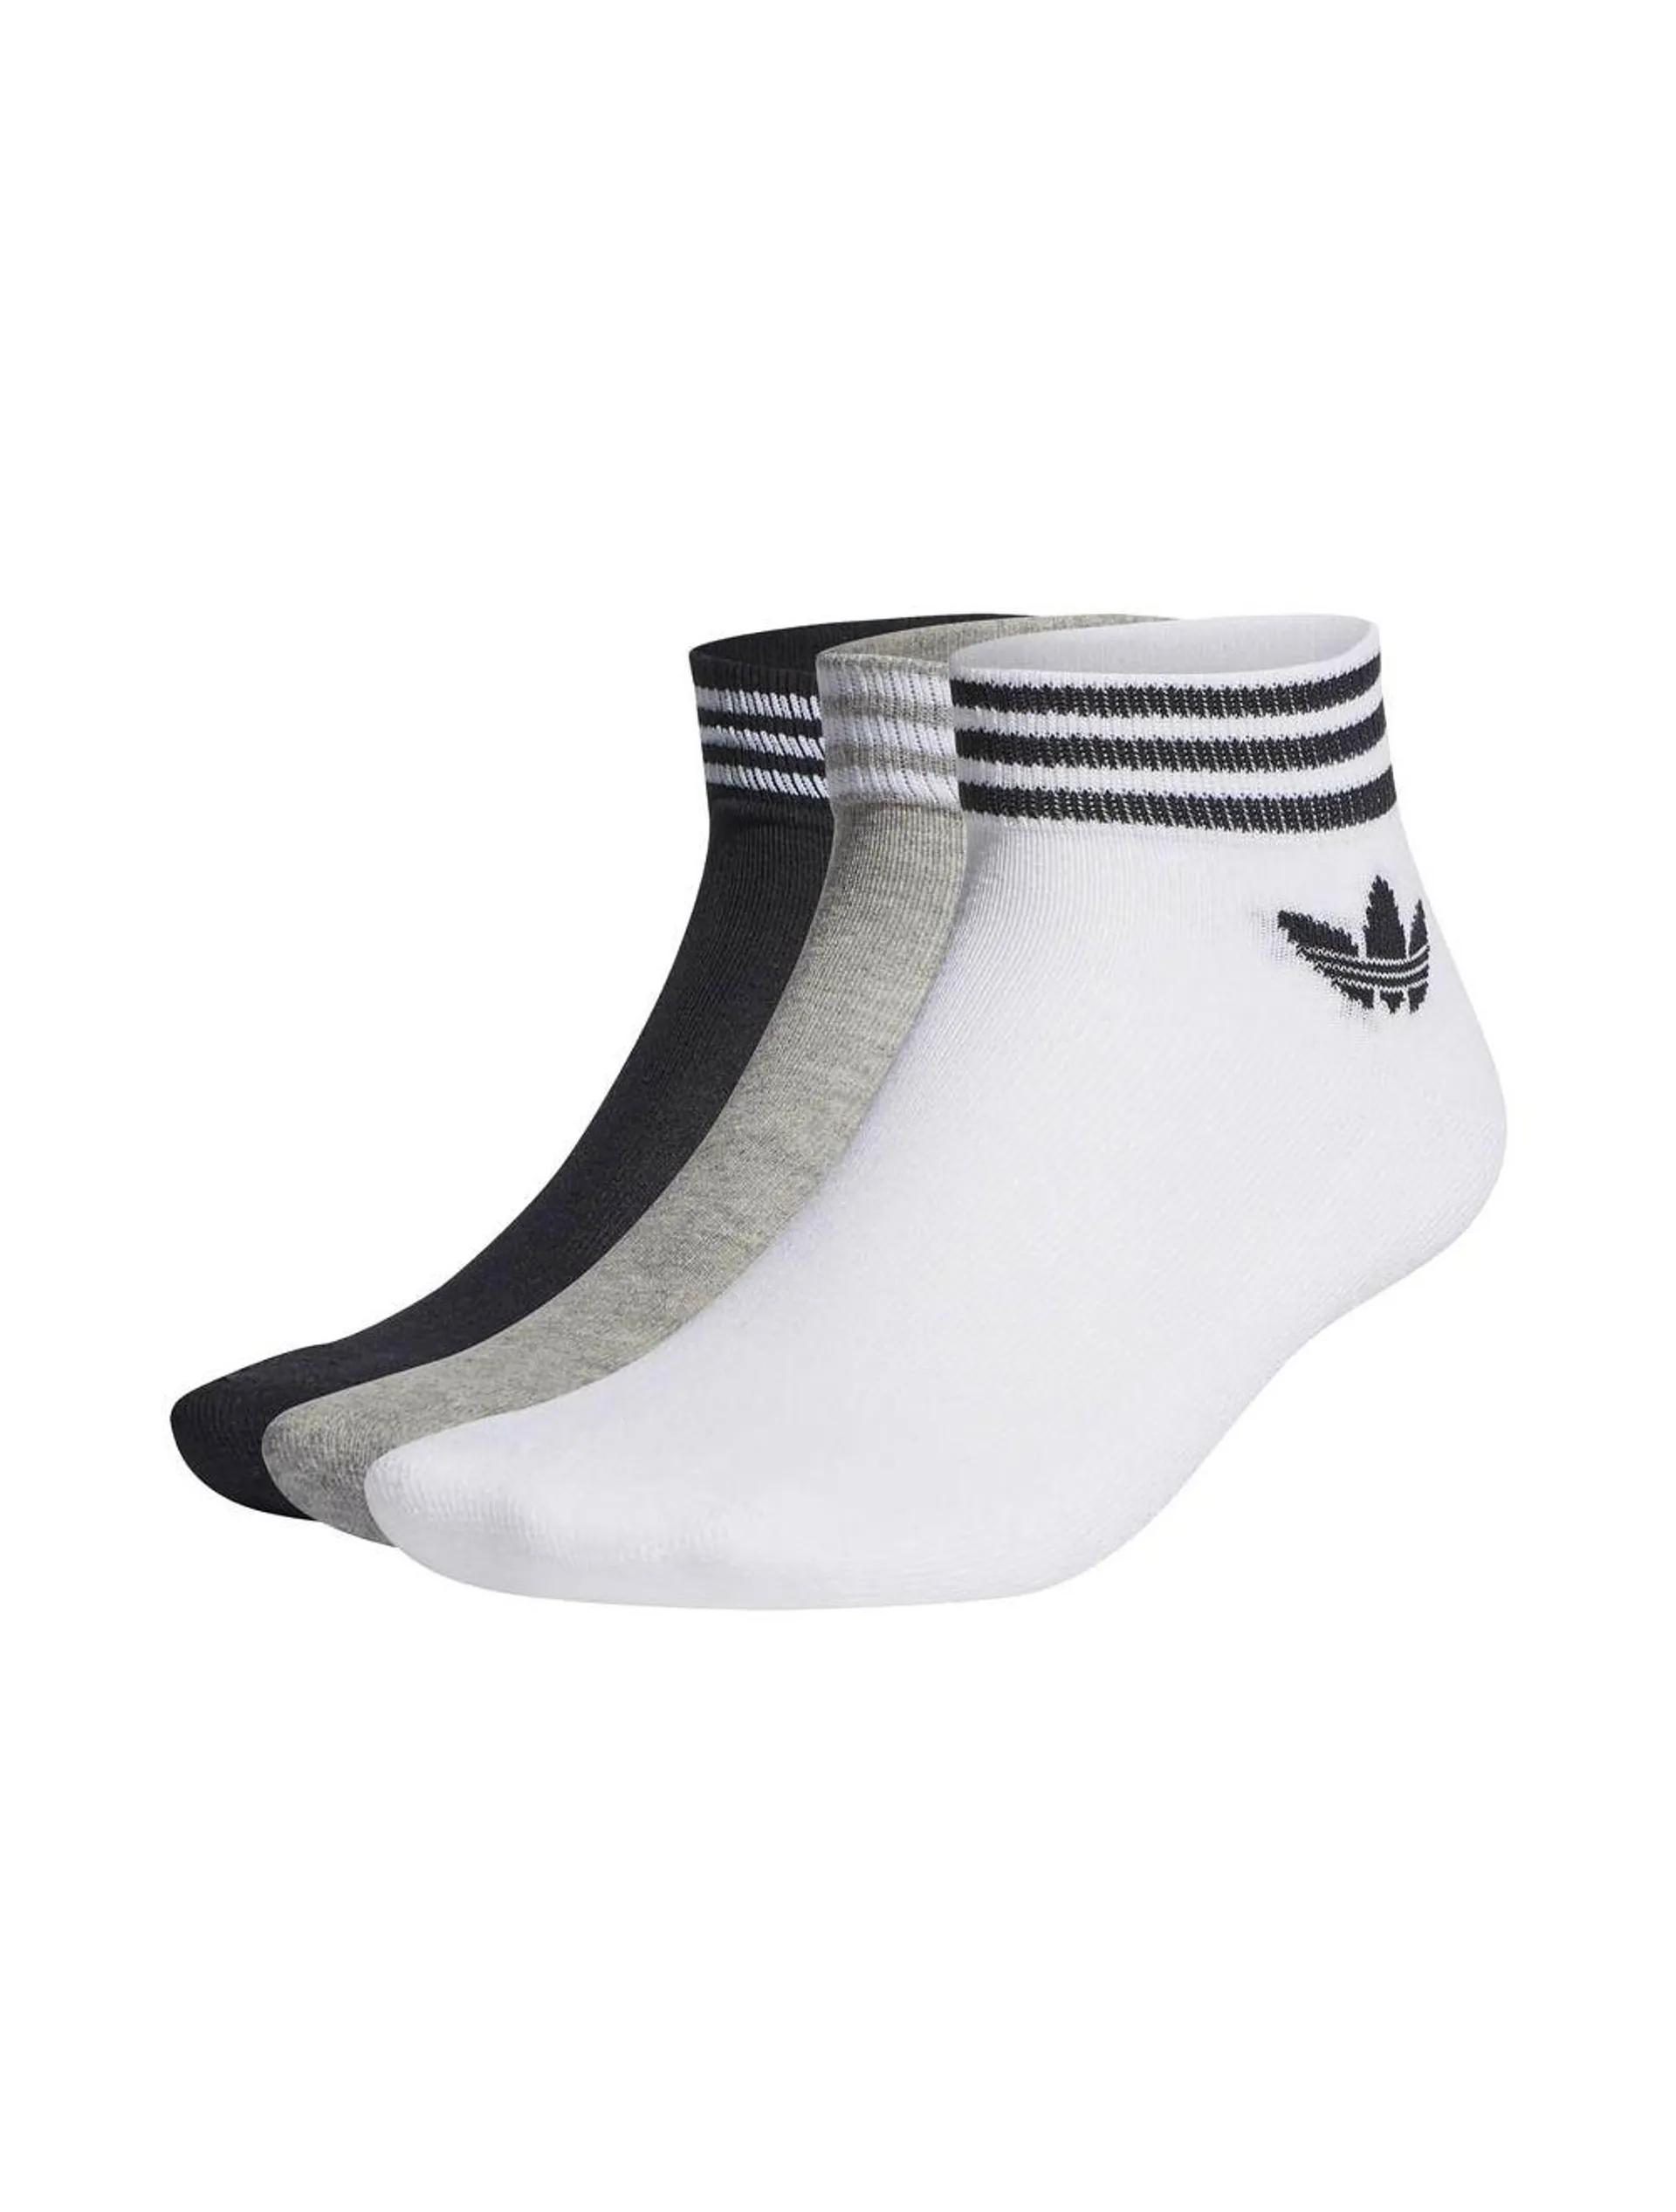 adidas Originals Island Club Trefoil Ankle Socks 3 Pairs White/Black/Grey